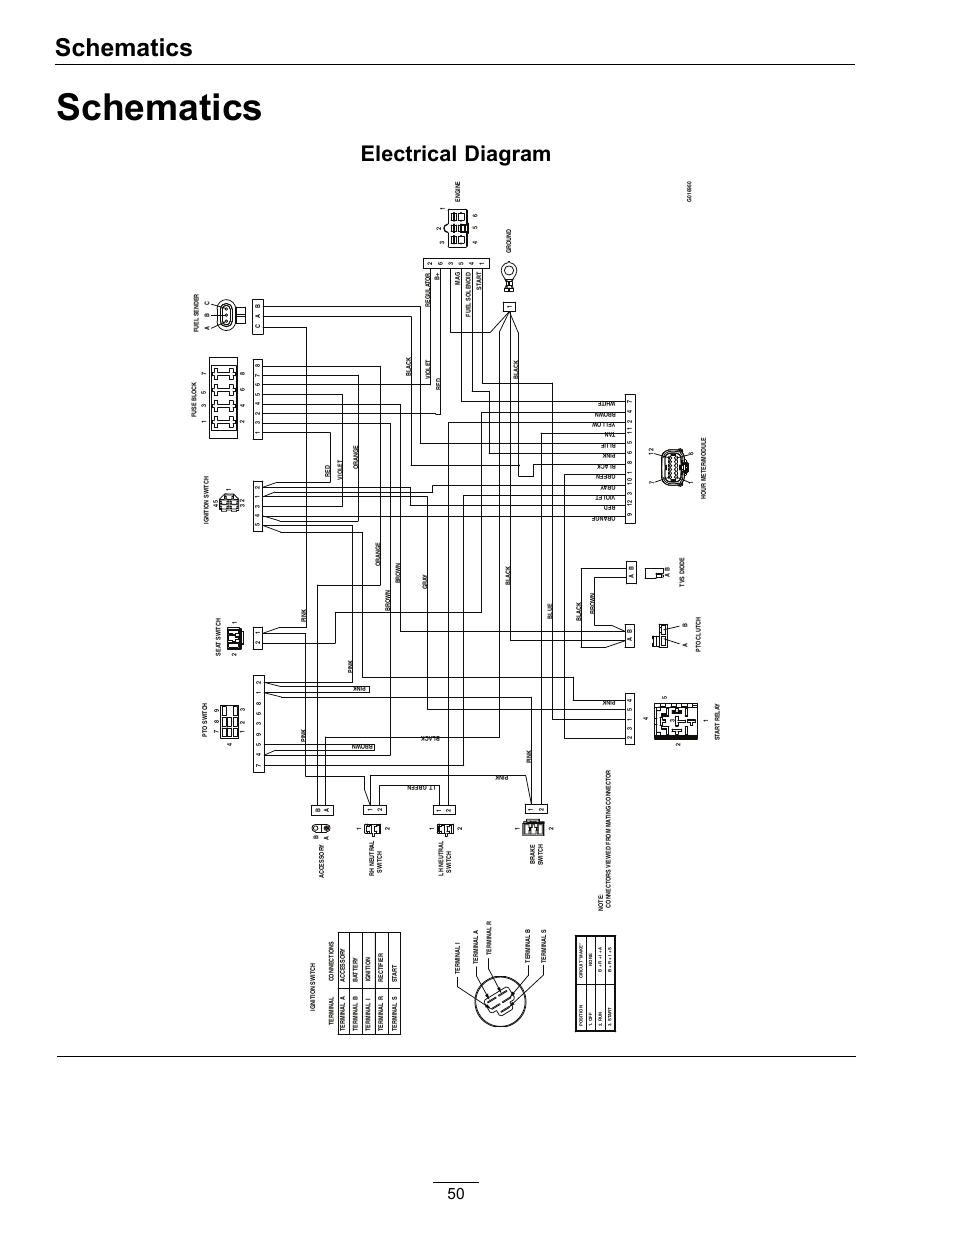 wiring diagram for 1991 mercury brunswick corp.16ft jon boat